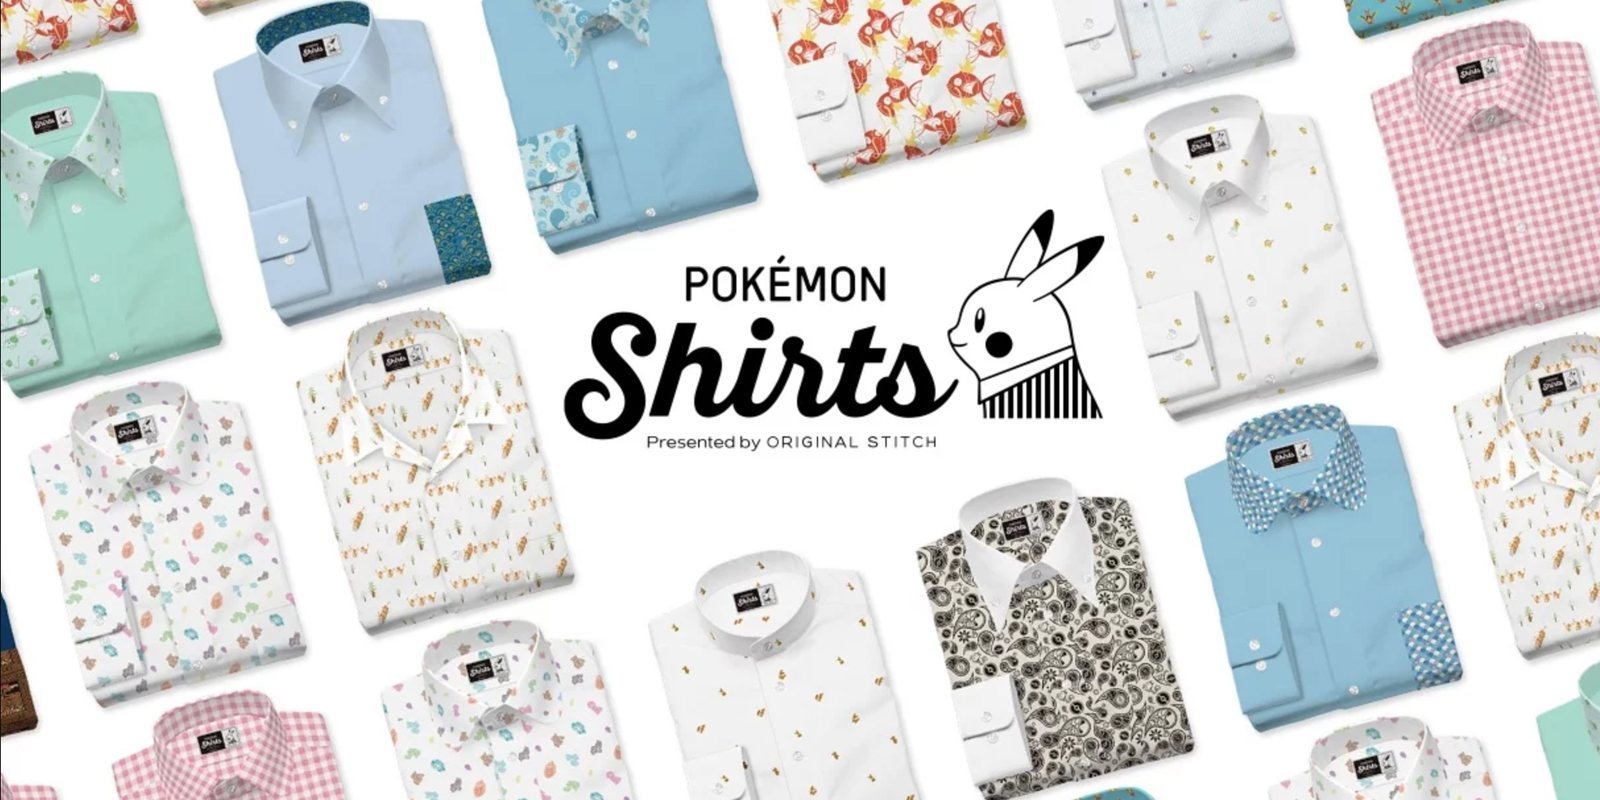 Las camisas Pokémon de Original Stitch llegarán a Occidente